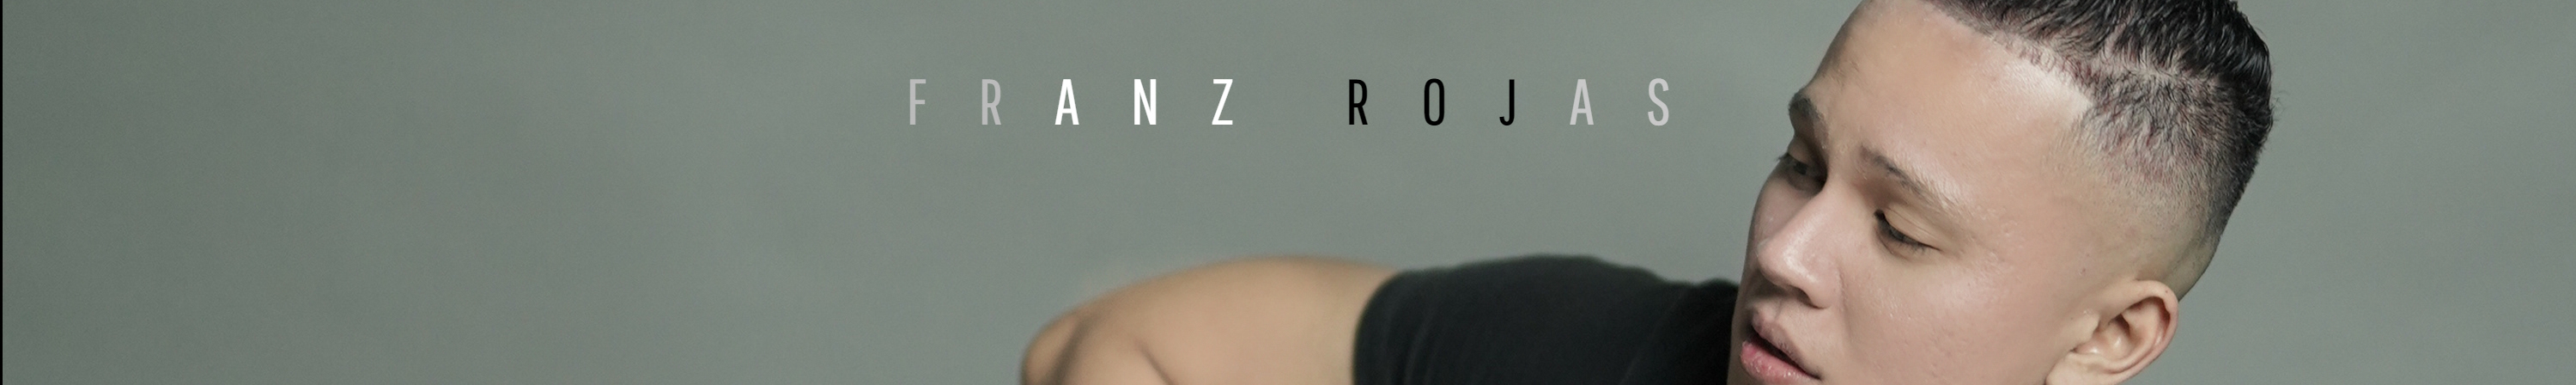 Franz Rojas's profile banner